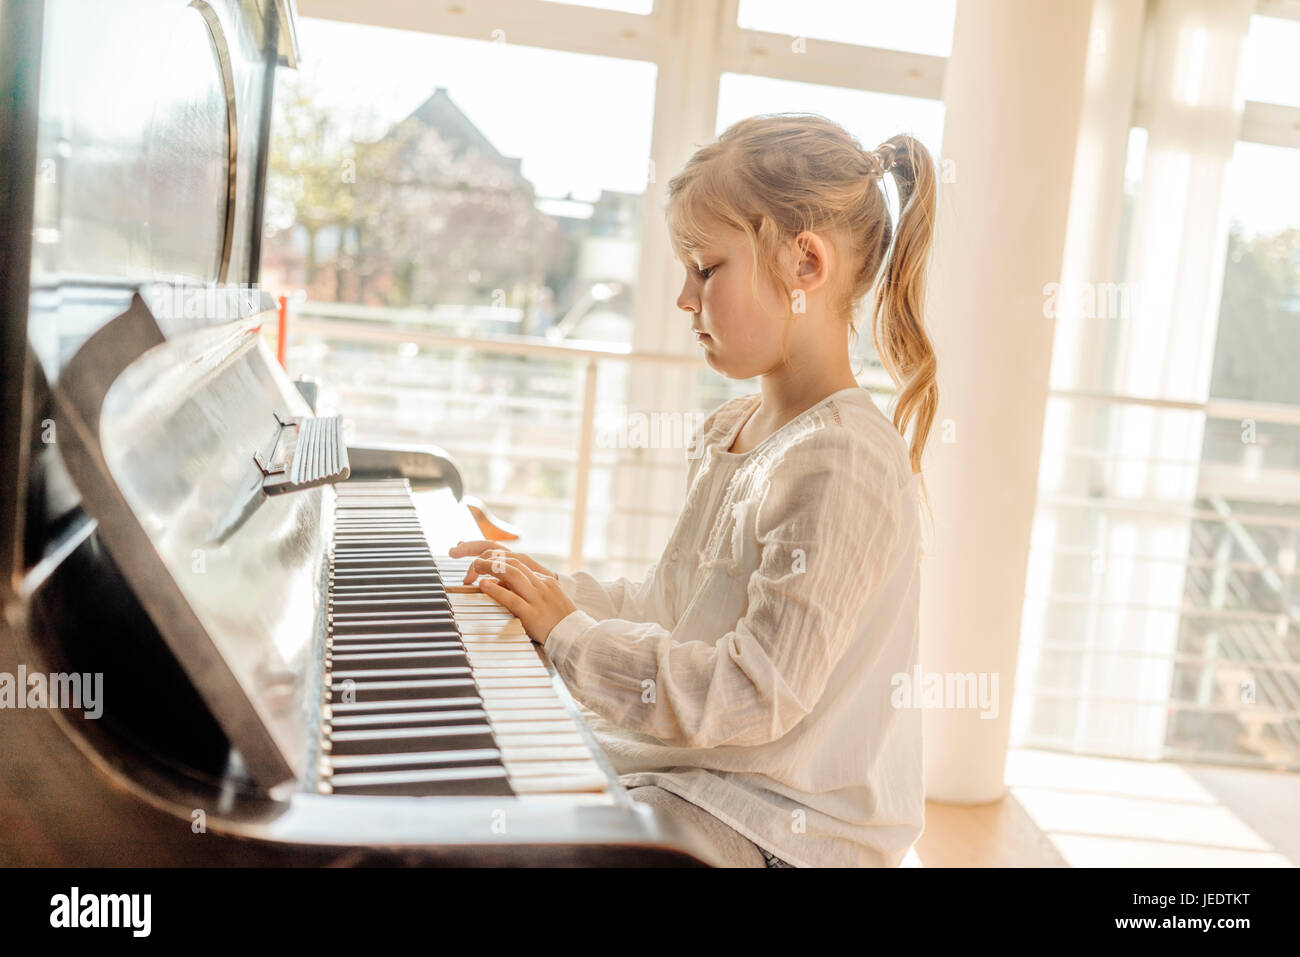 Girl at home playing piano Stock Photo